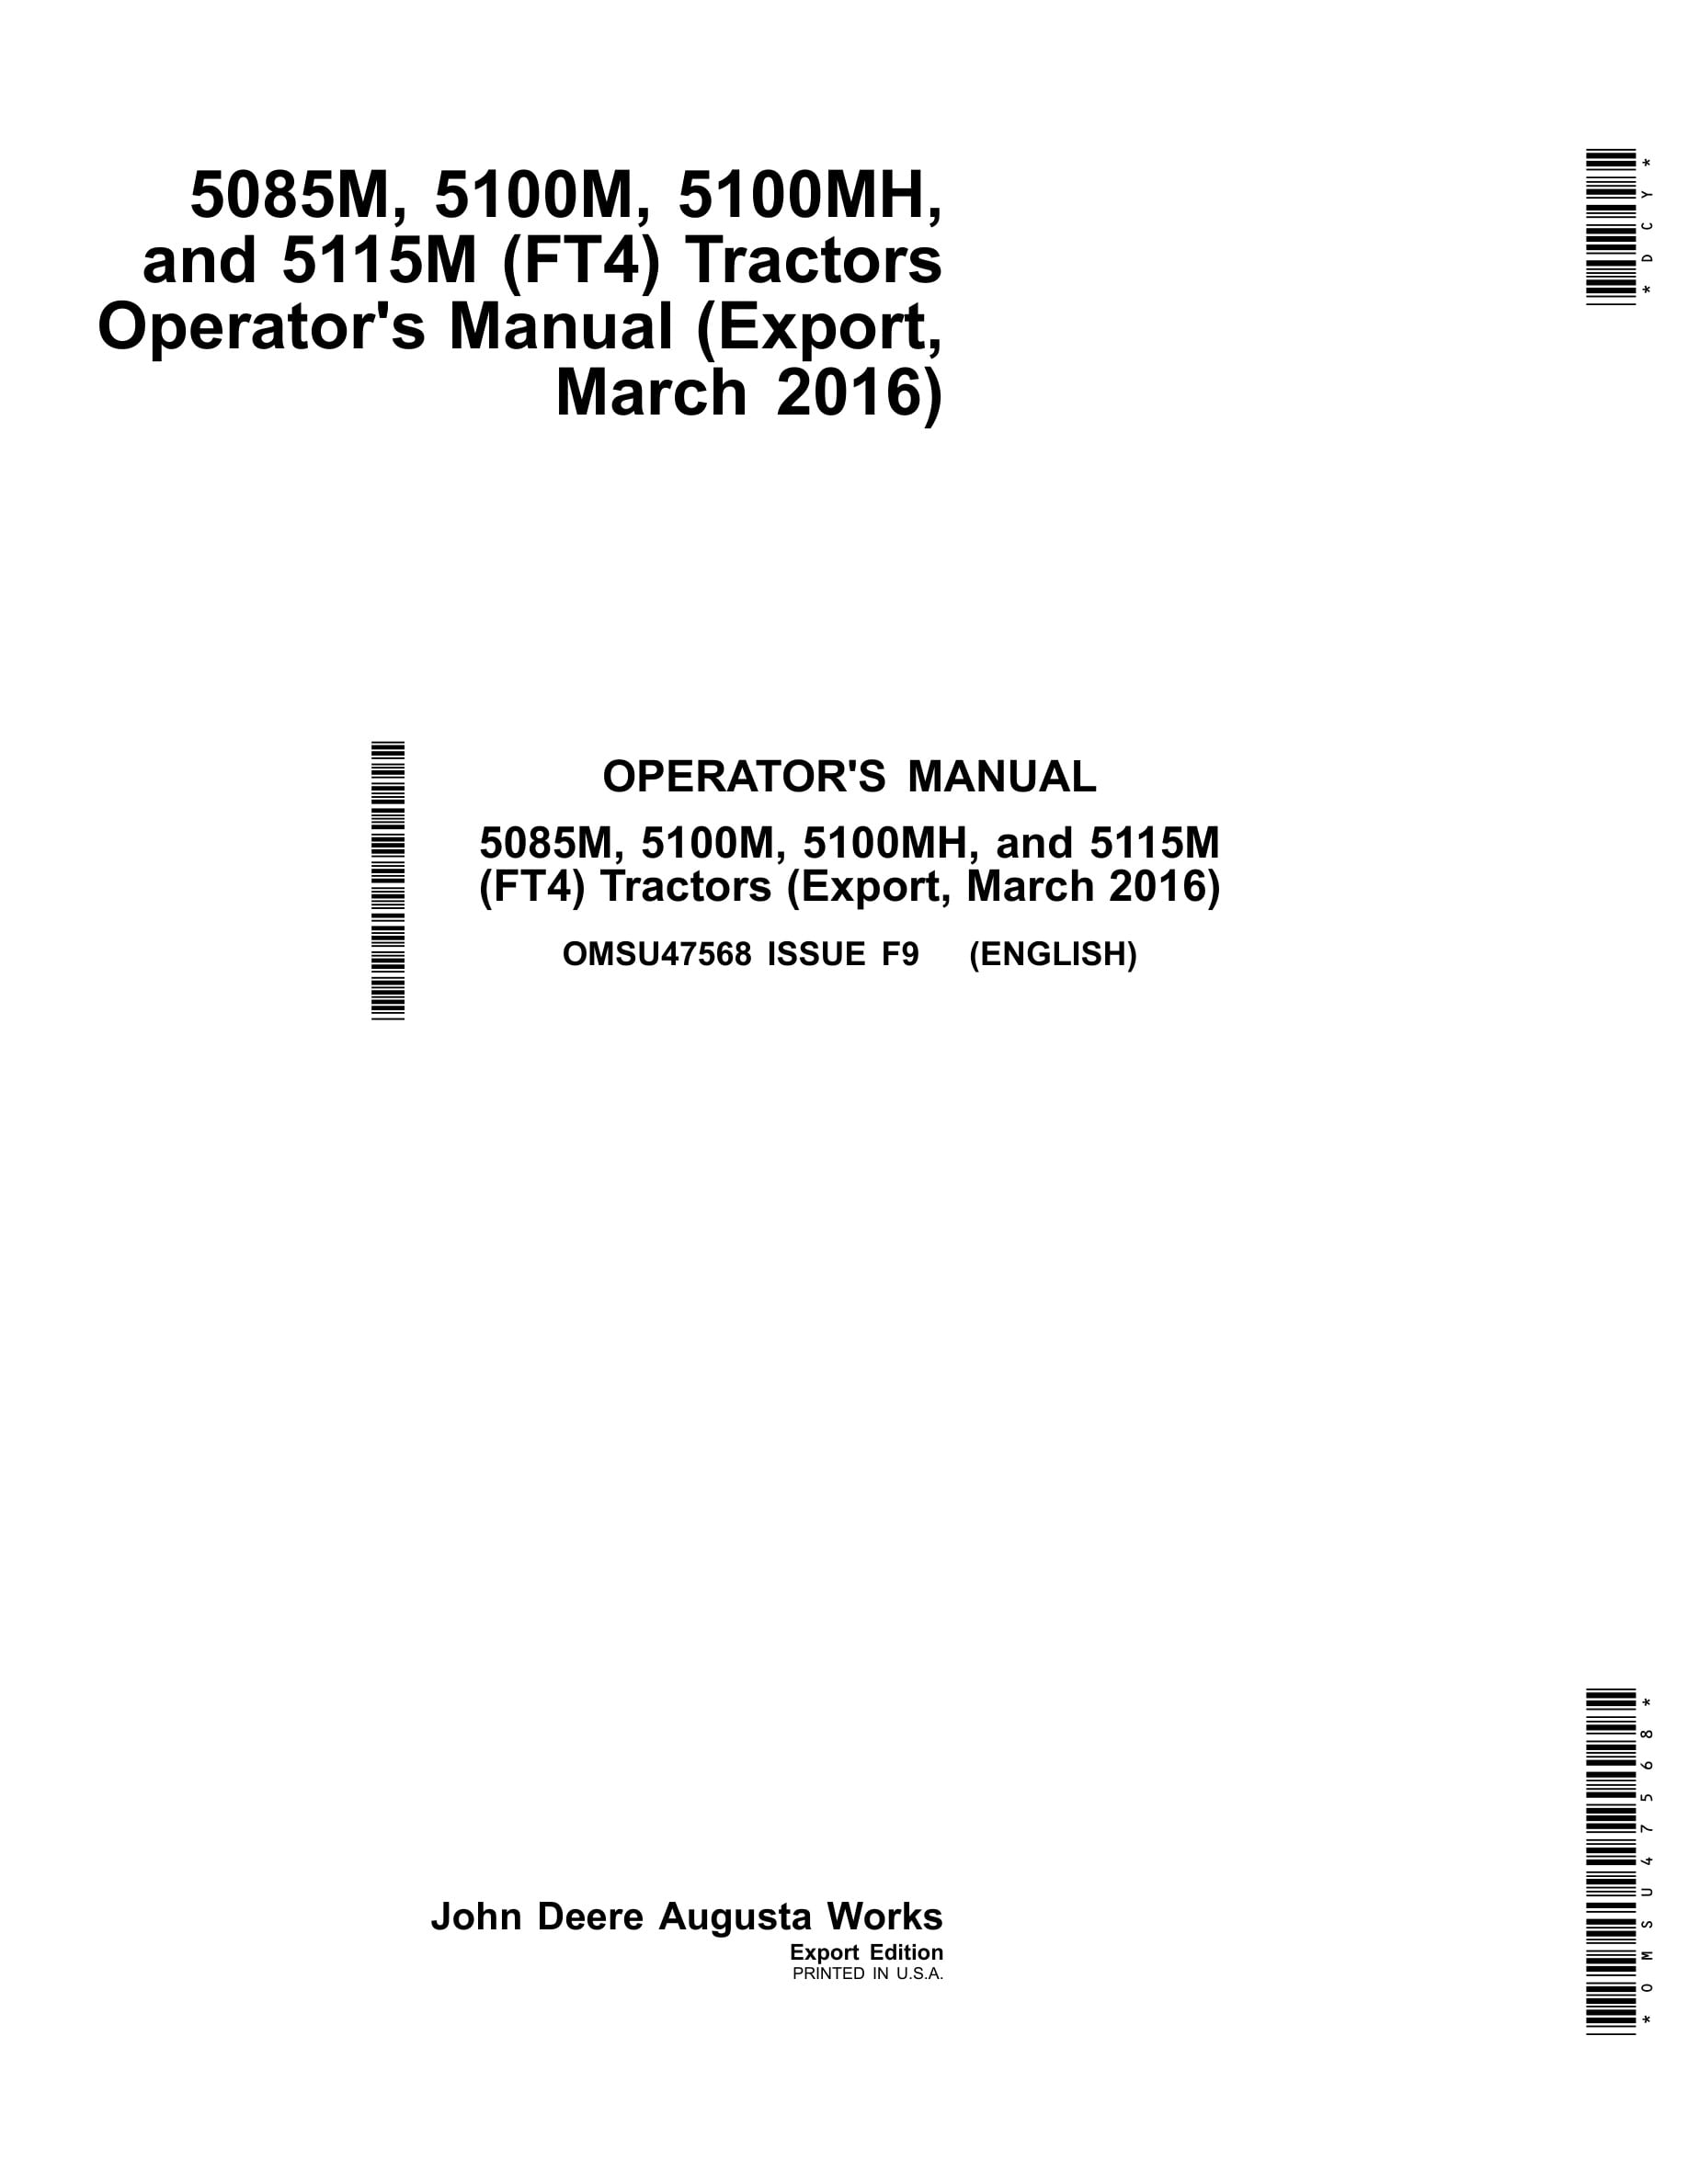 John Deere 5085m, 5100m, 5100mh, And 5115m (ft4) Tractors Operator Manuals OMSU47568-1